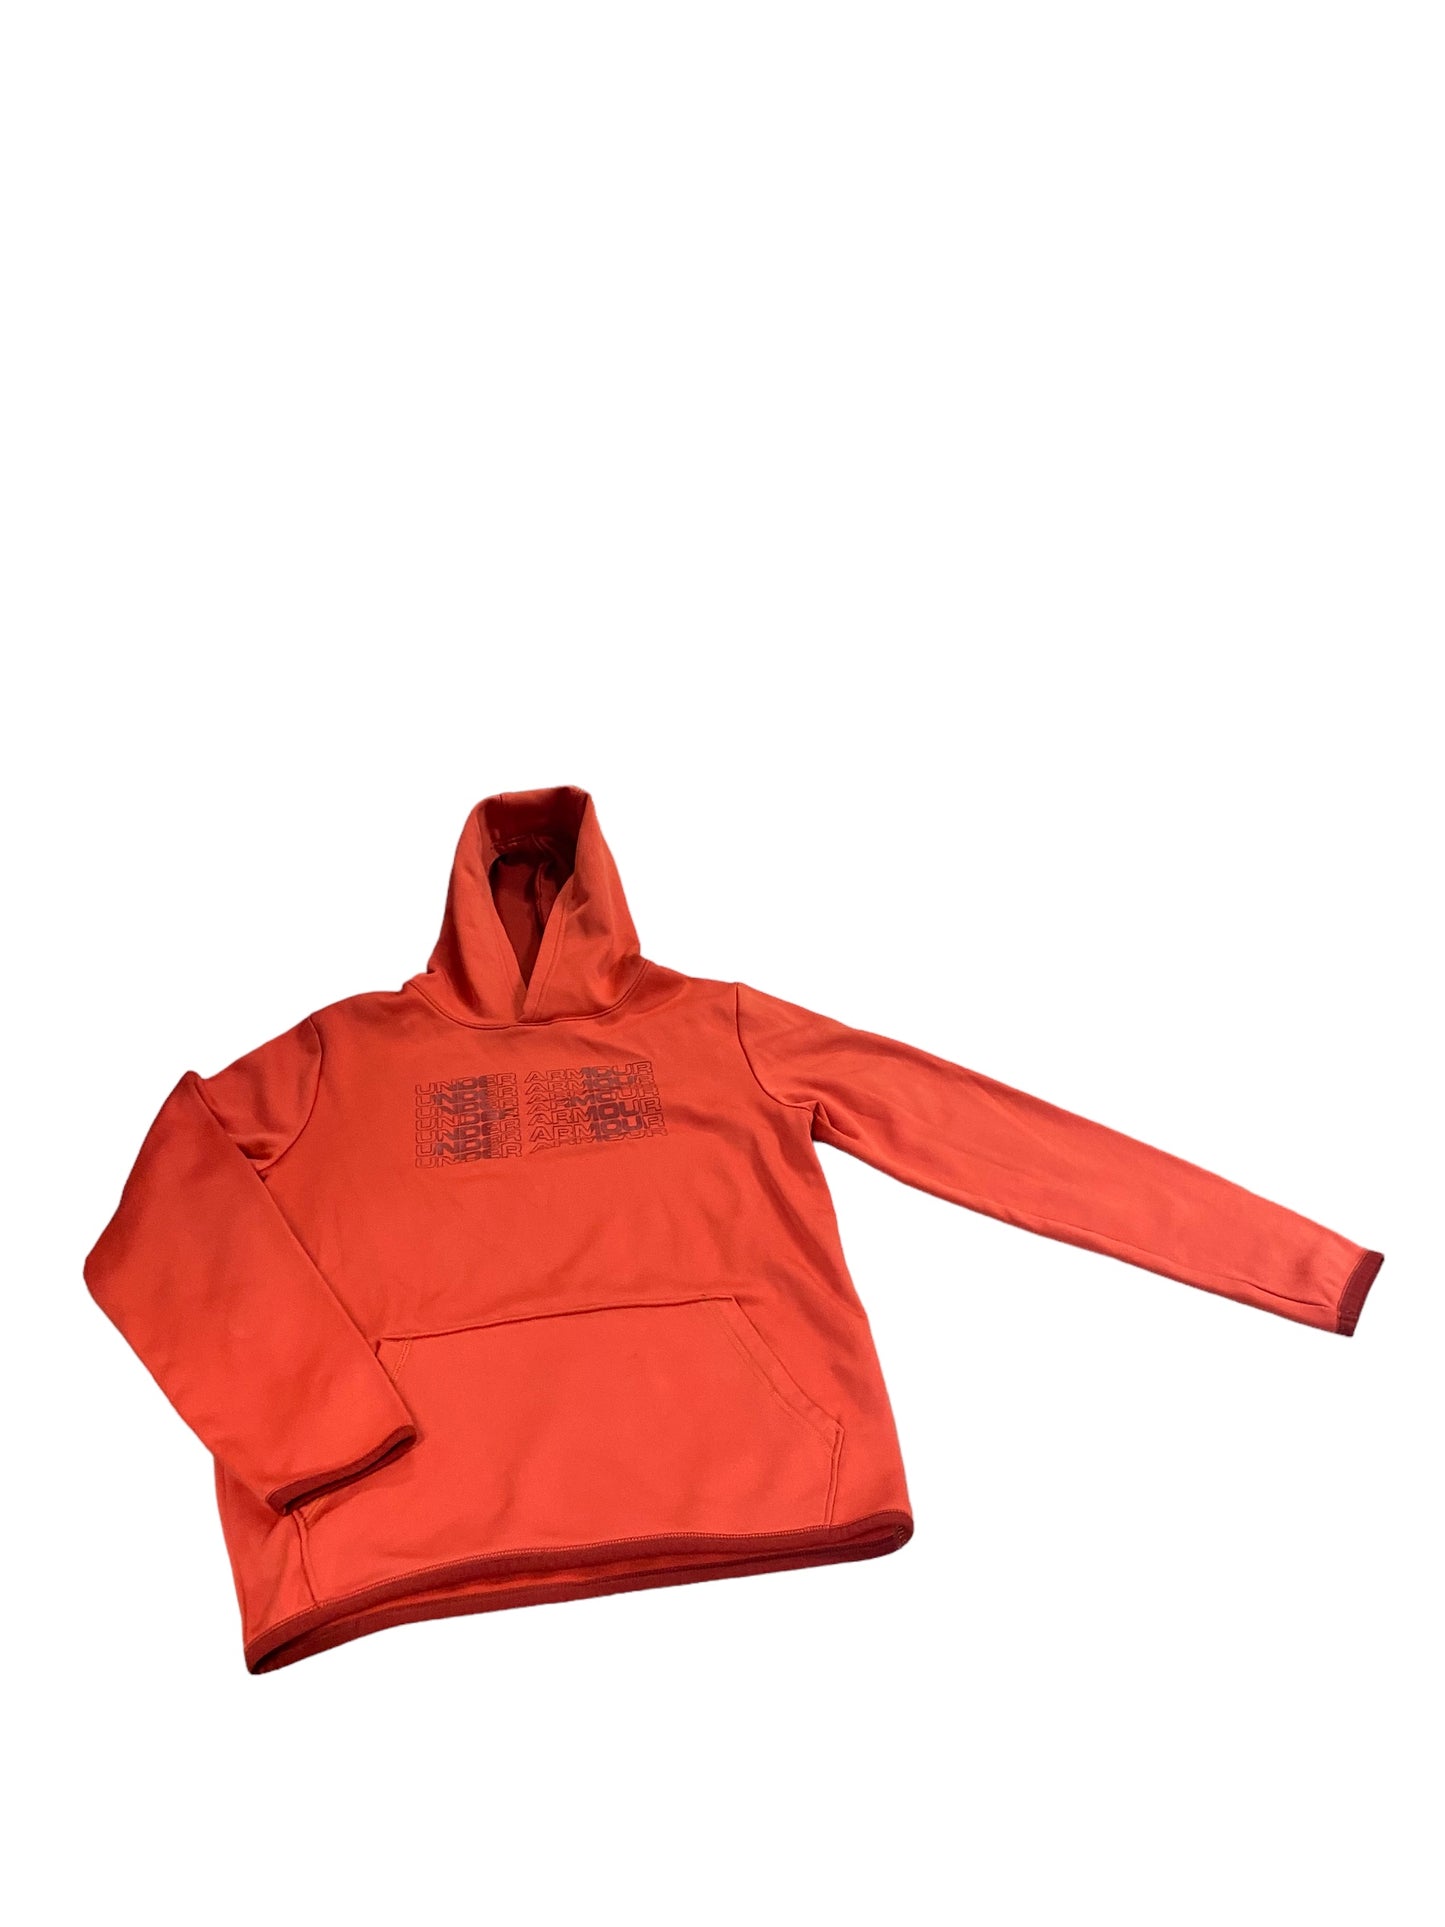 Orange/red sweater size:14